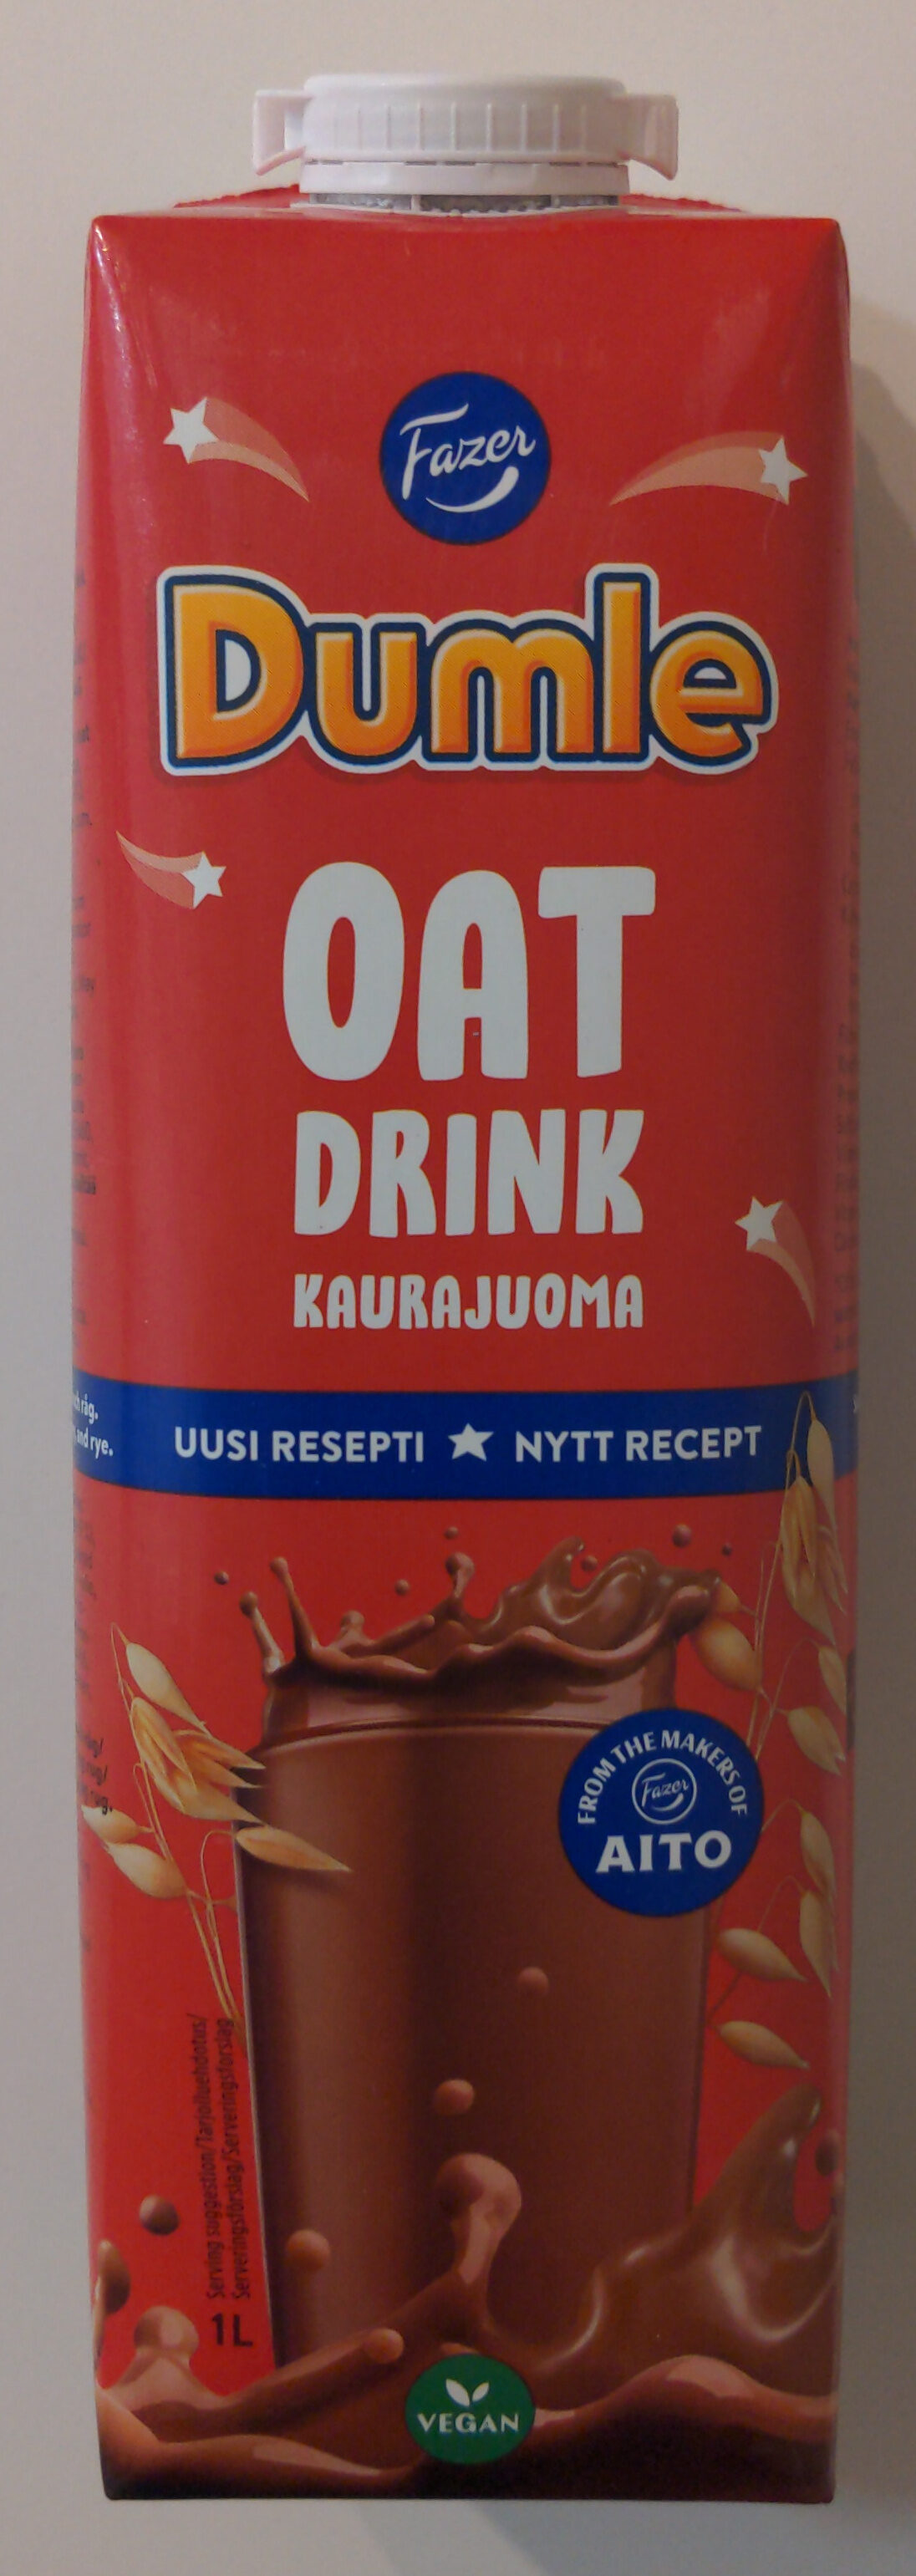 Dumle oat drink - Tuote